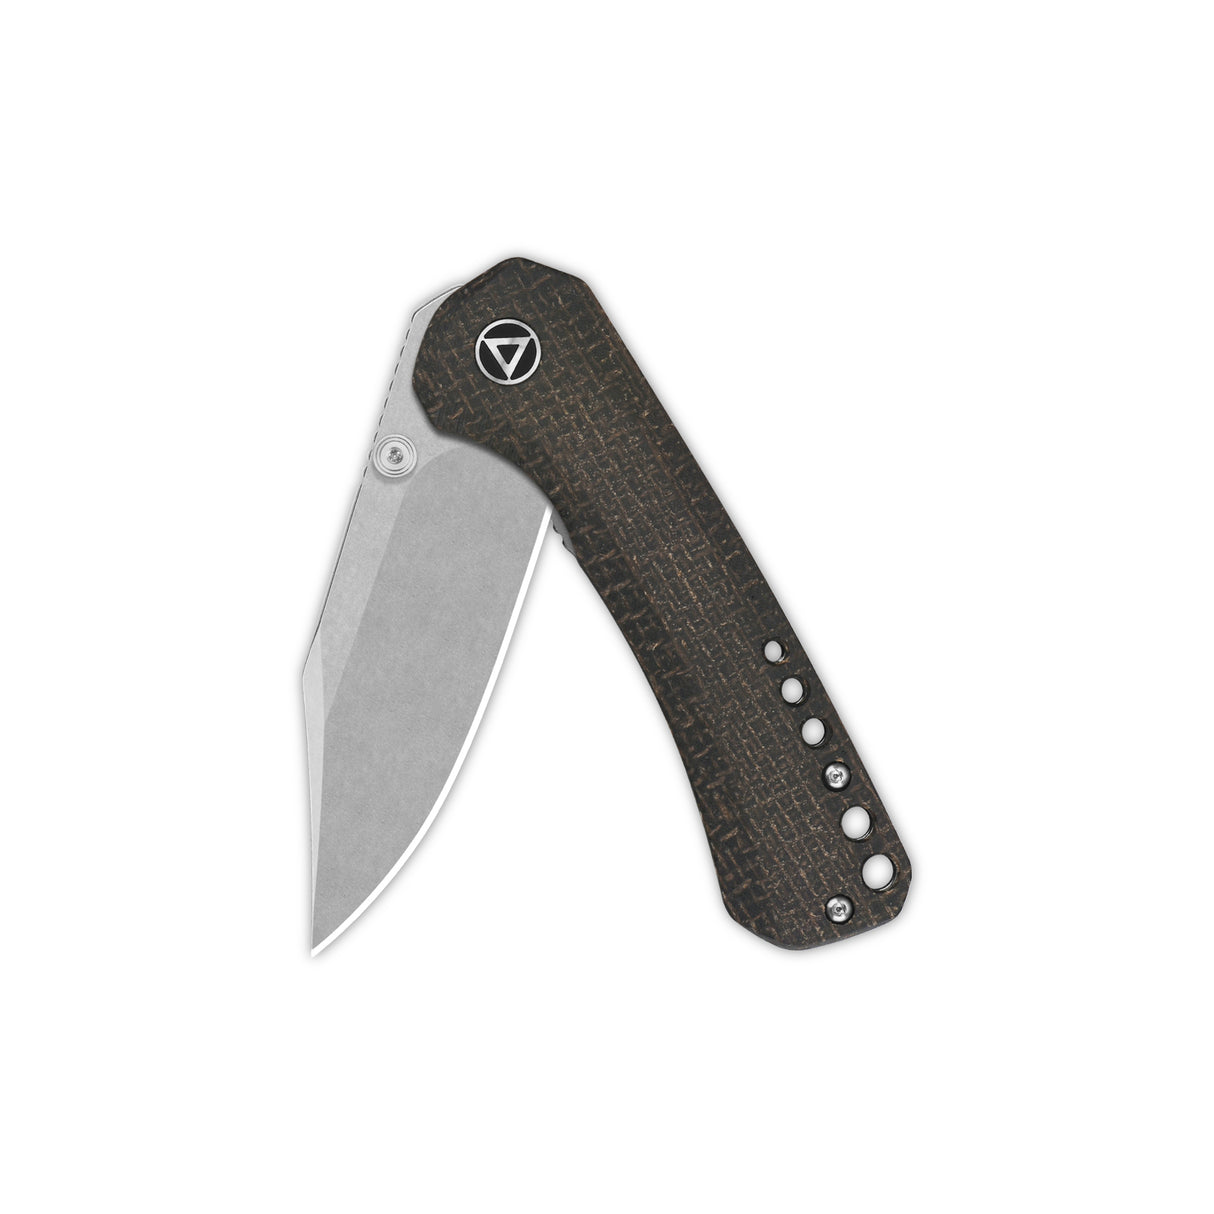 QSP Kestrel Pocket knife 14C28N blade Micarta handle